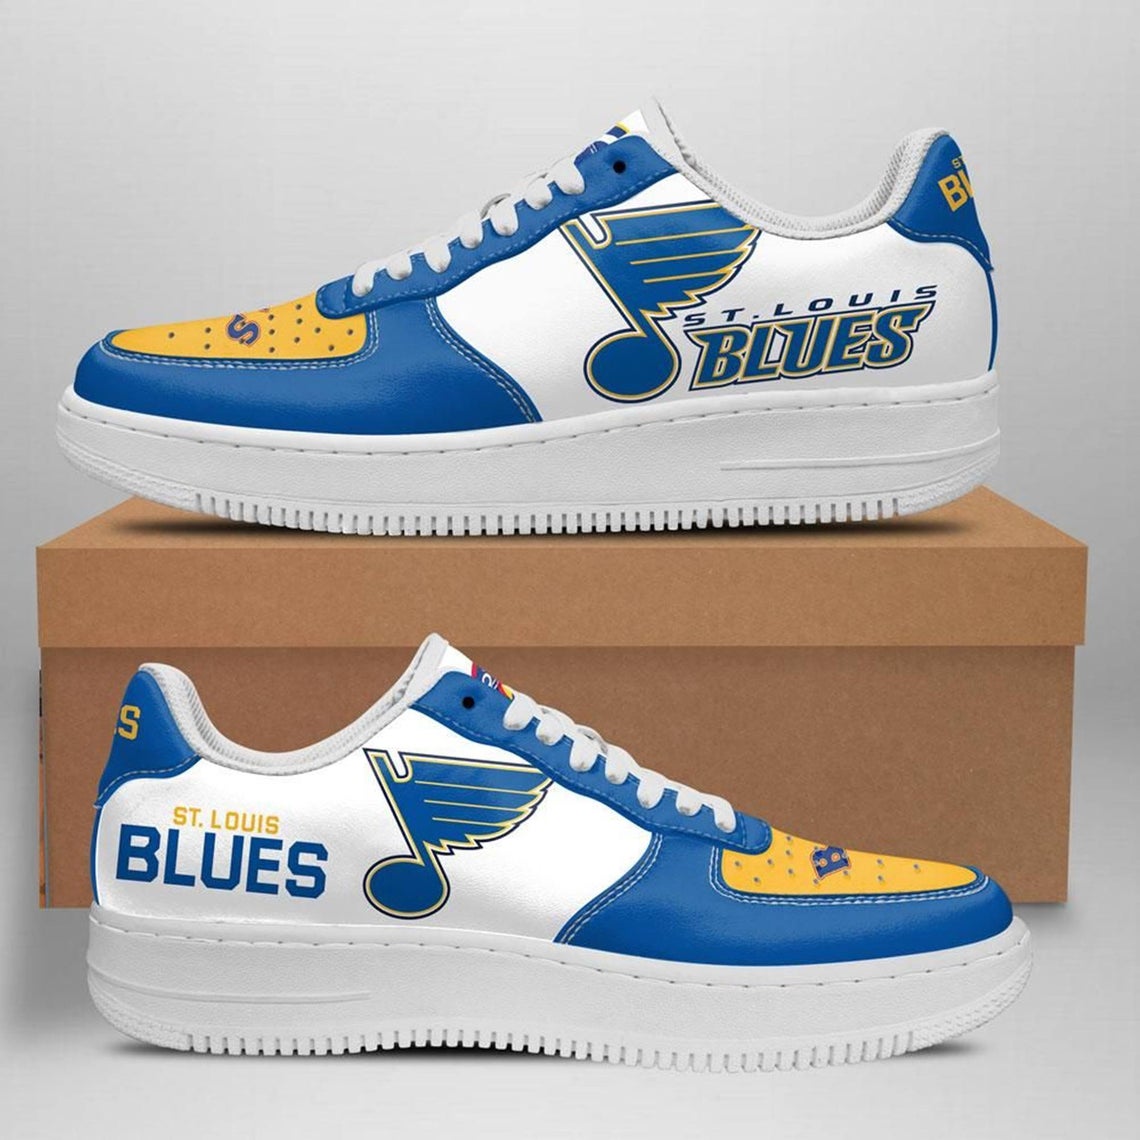 UNIQUE] Saint Louis Billikens Custom Nike Air Force 1 Sneakers